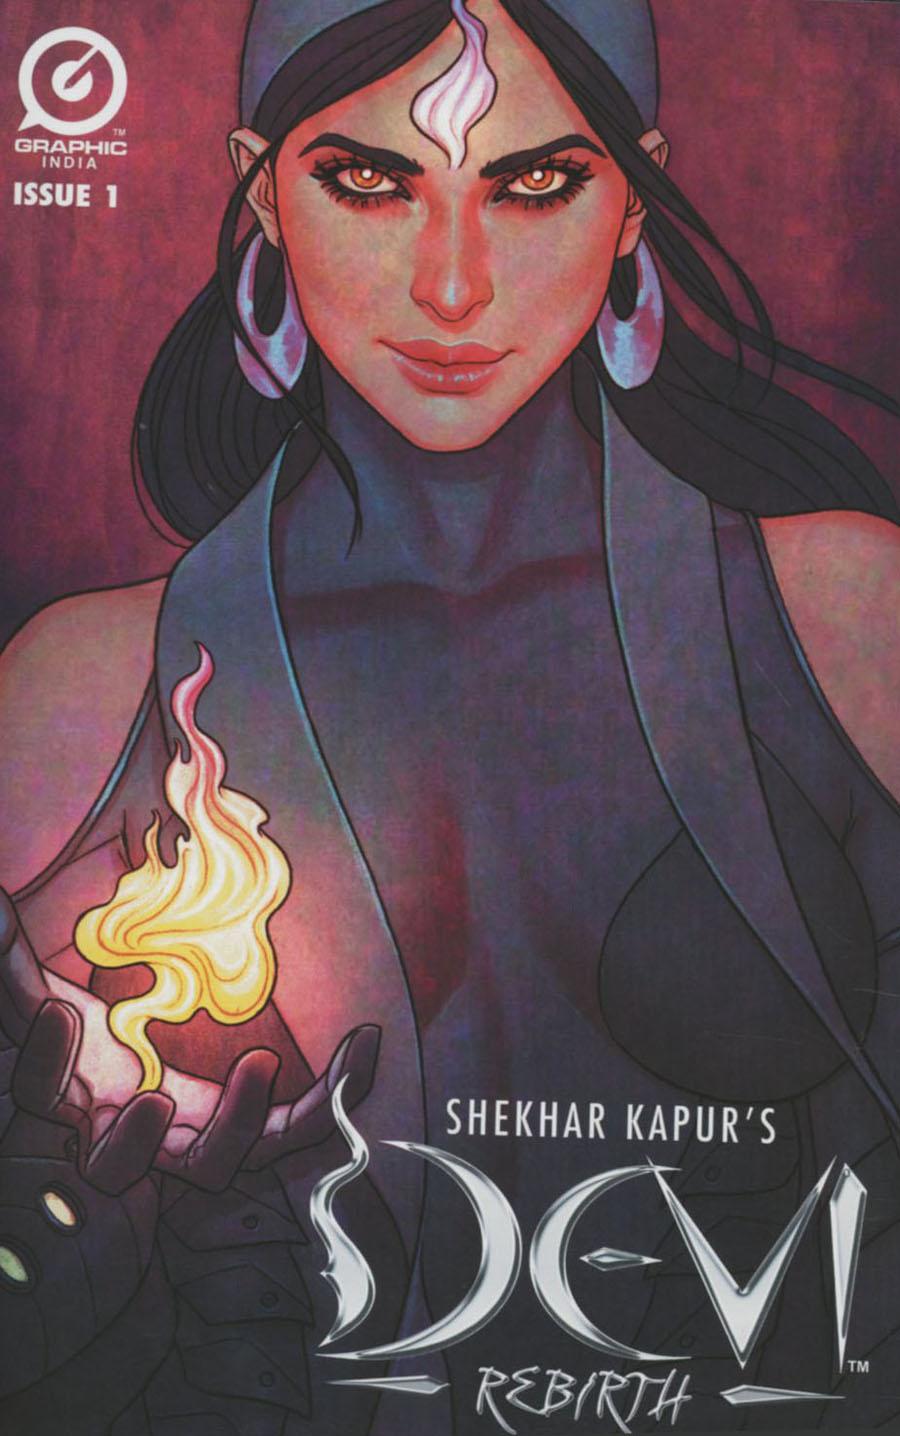 Shekhar Kapurs Devi Rebirth Vol. 1 #1